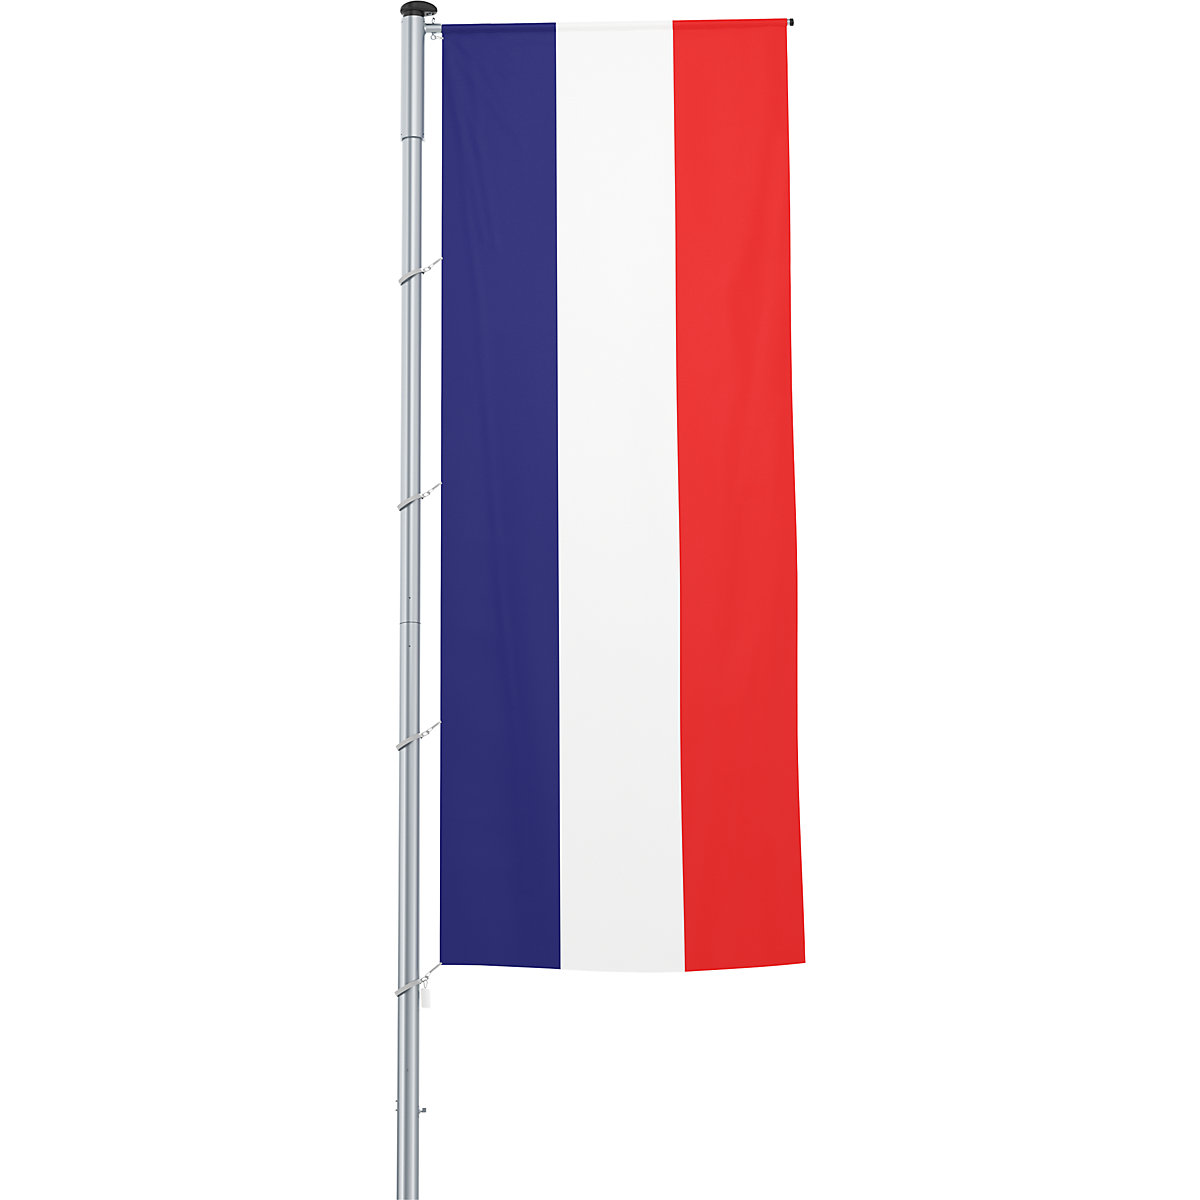 Steag pentru braț/drapel național – Mannus, format 1,2 x 3 m, Franța-13